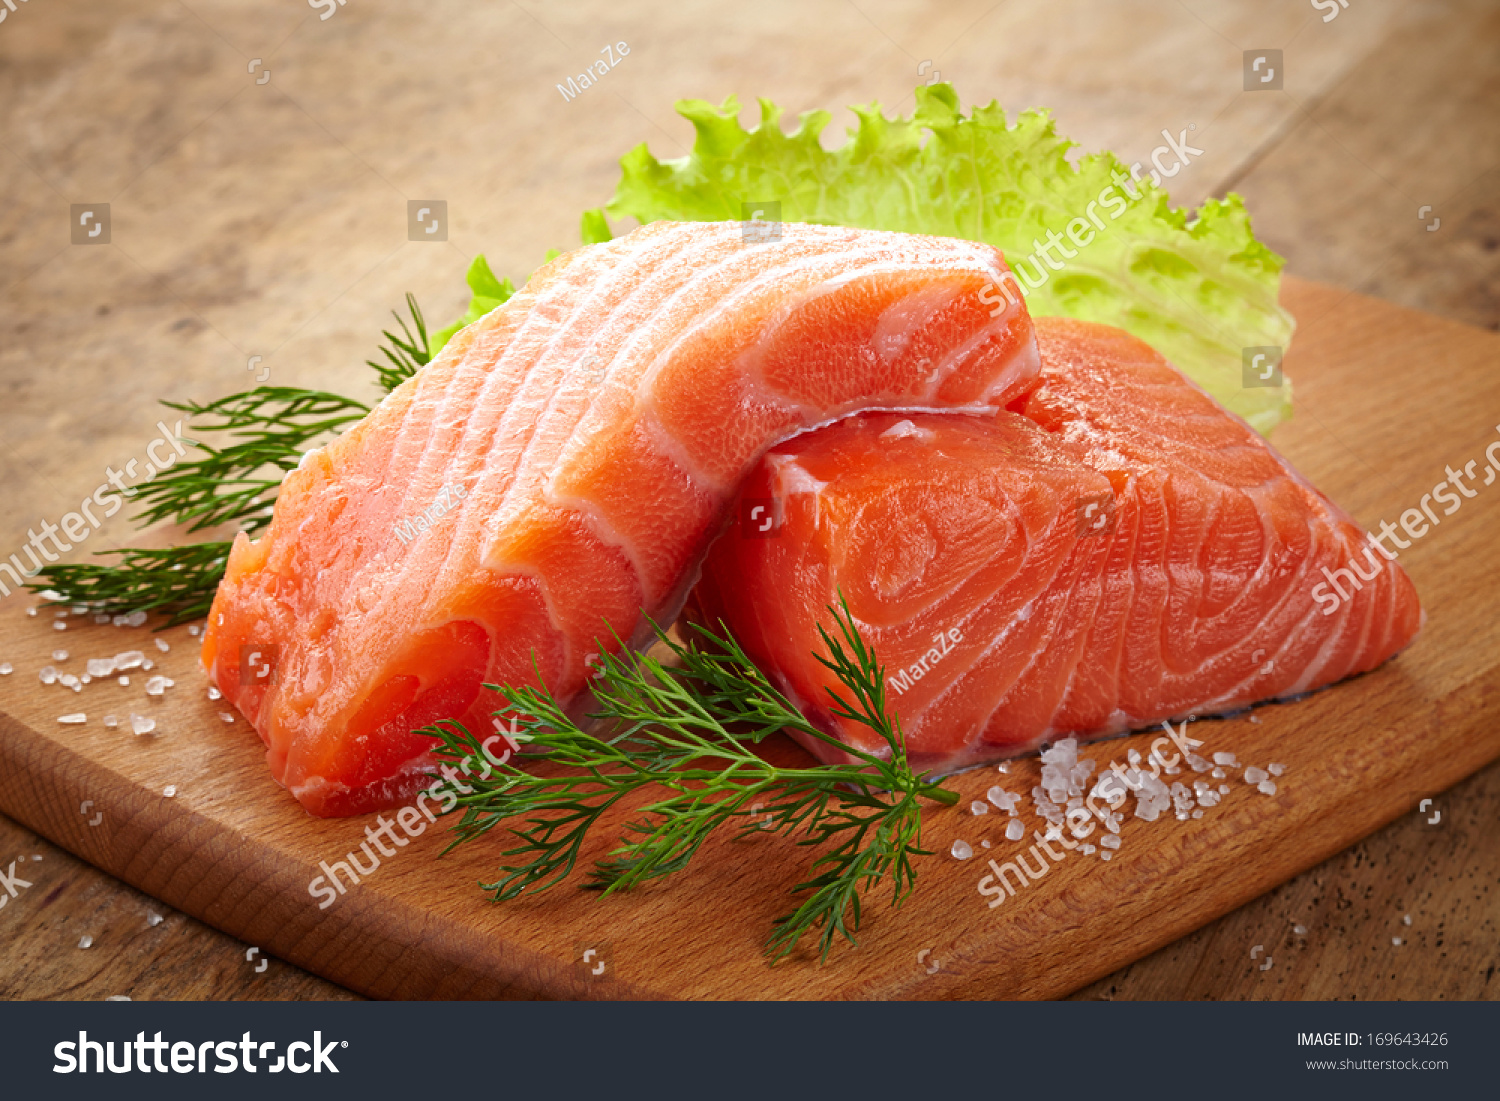 fresh raw salmon on wooden cutting board #169643426